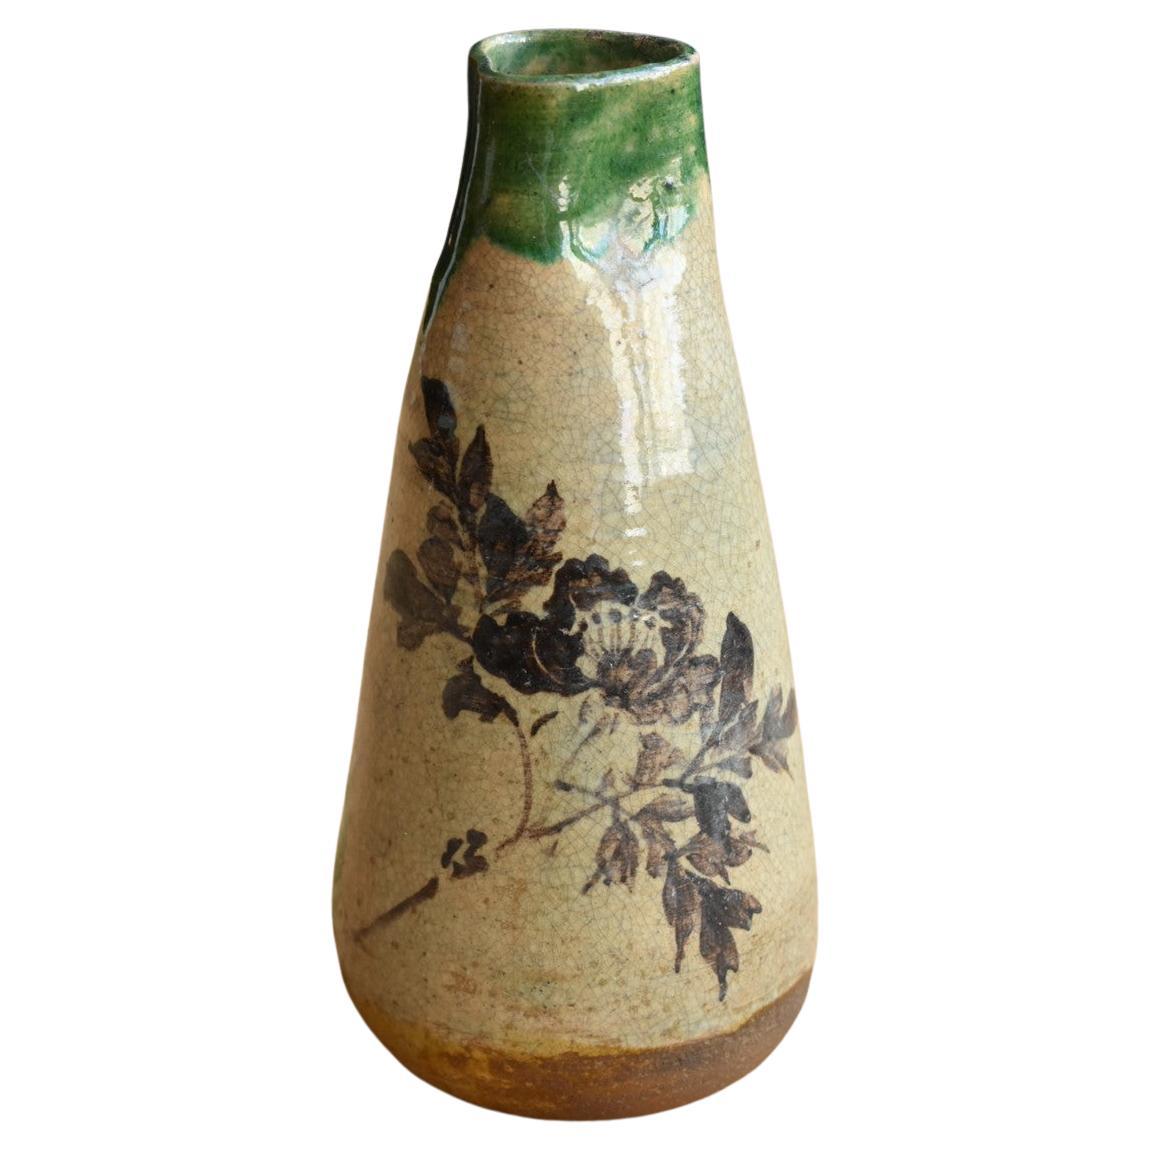 Japanese Beautiful Color Antique Pottery Sake Bottle / 1840-1900 / Small Vase